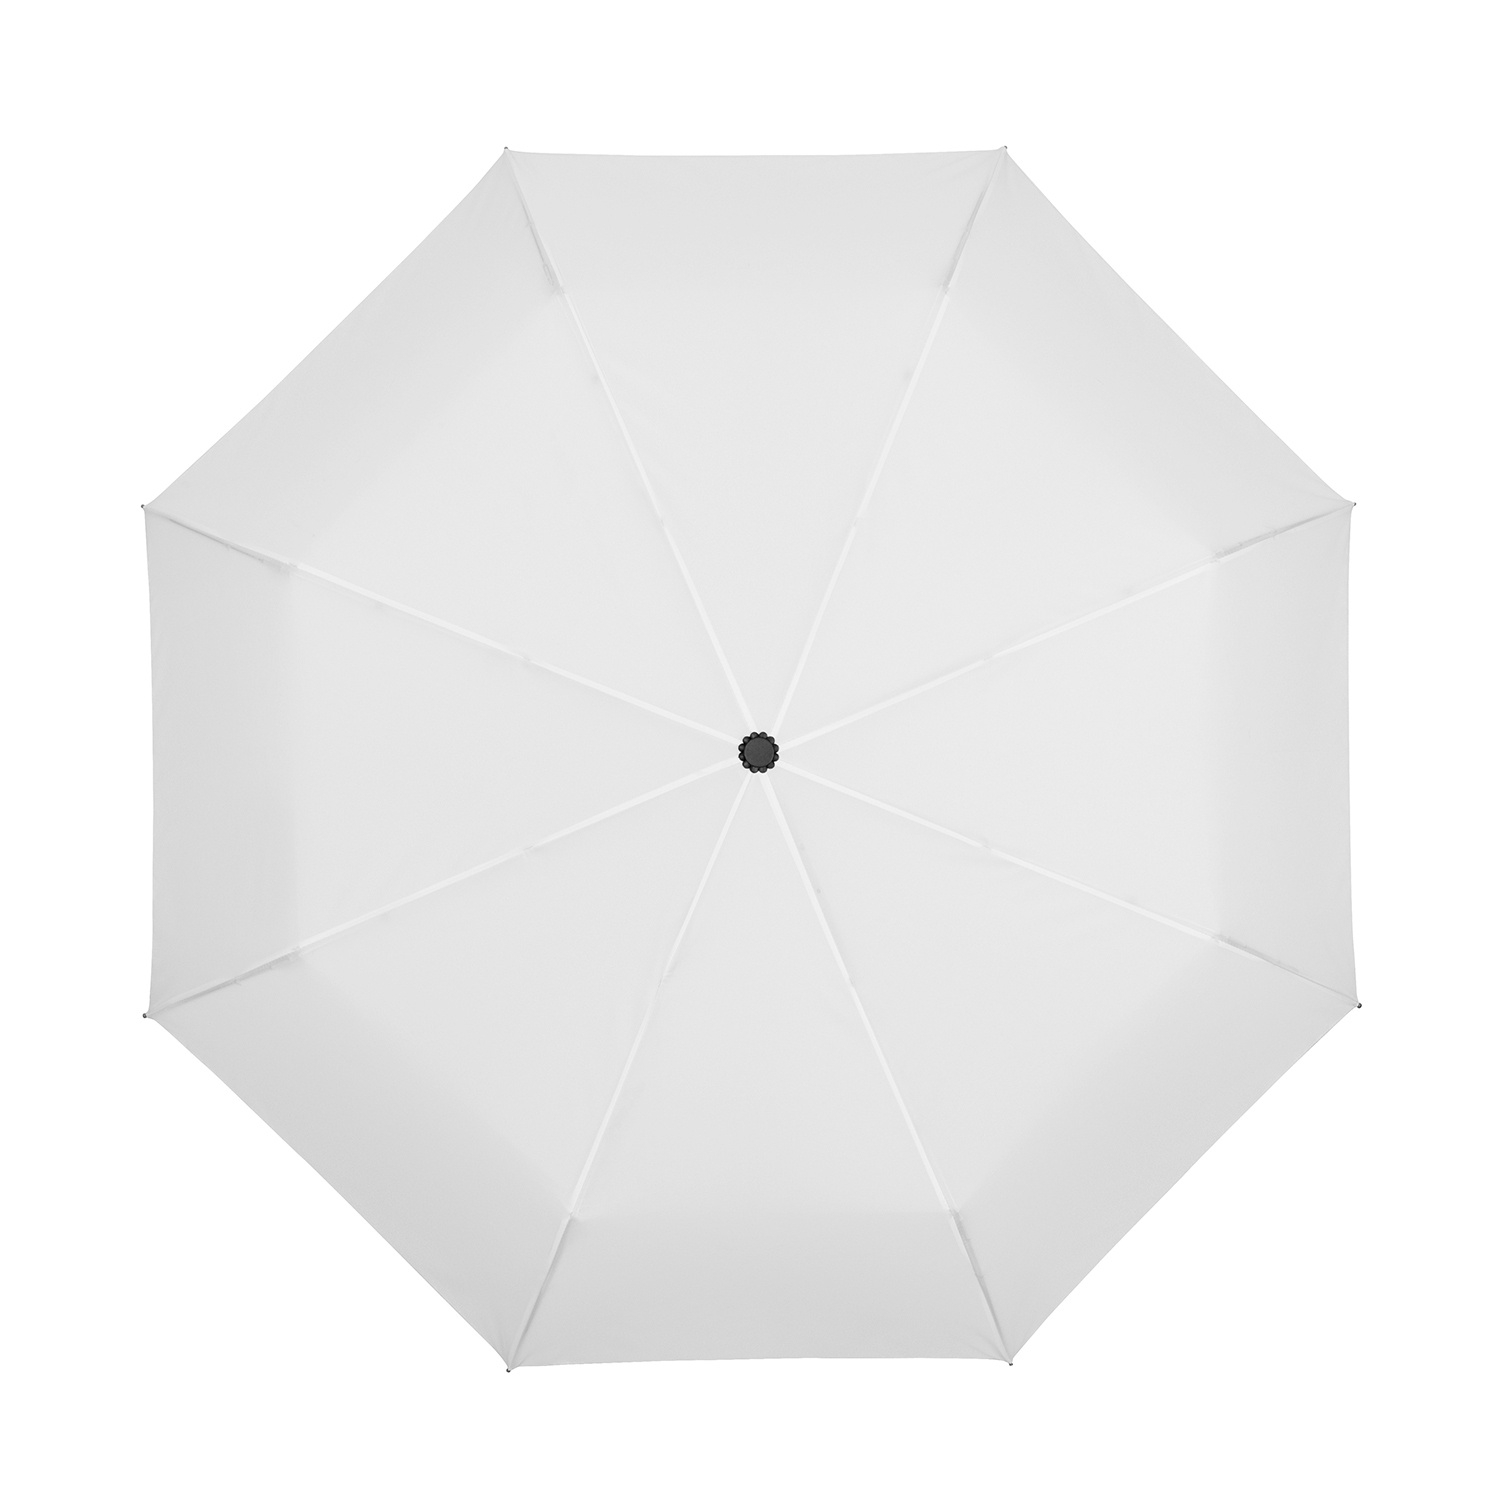 All-Over Print Automatic Umbrella - Print On Demand | HugePOD